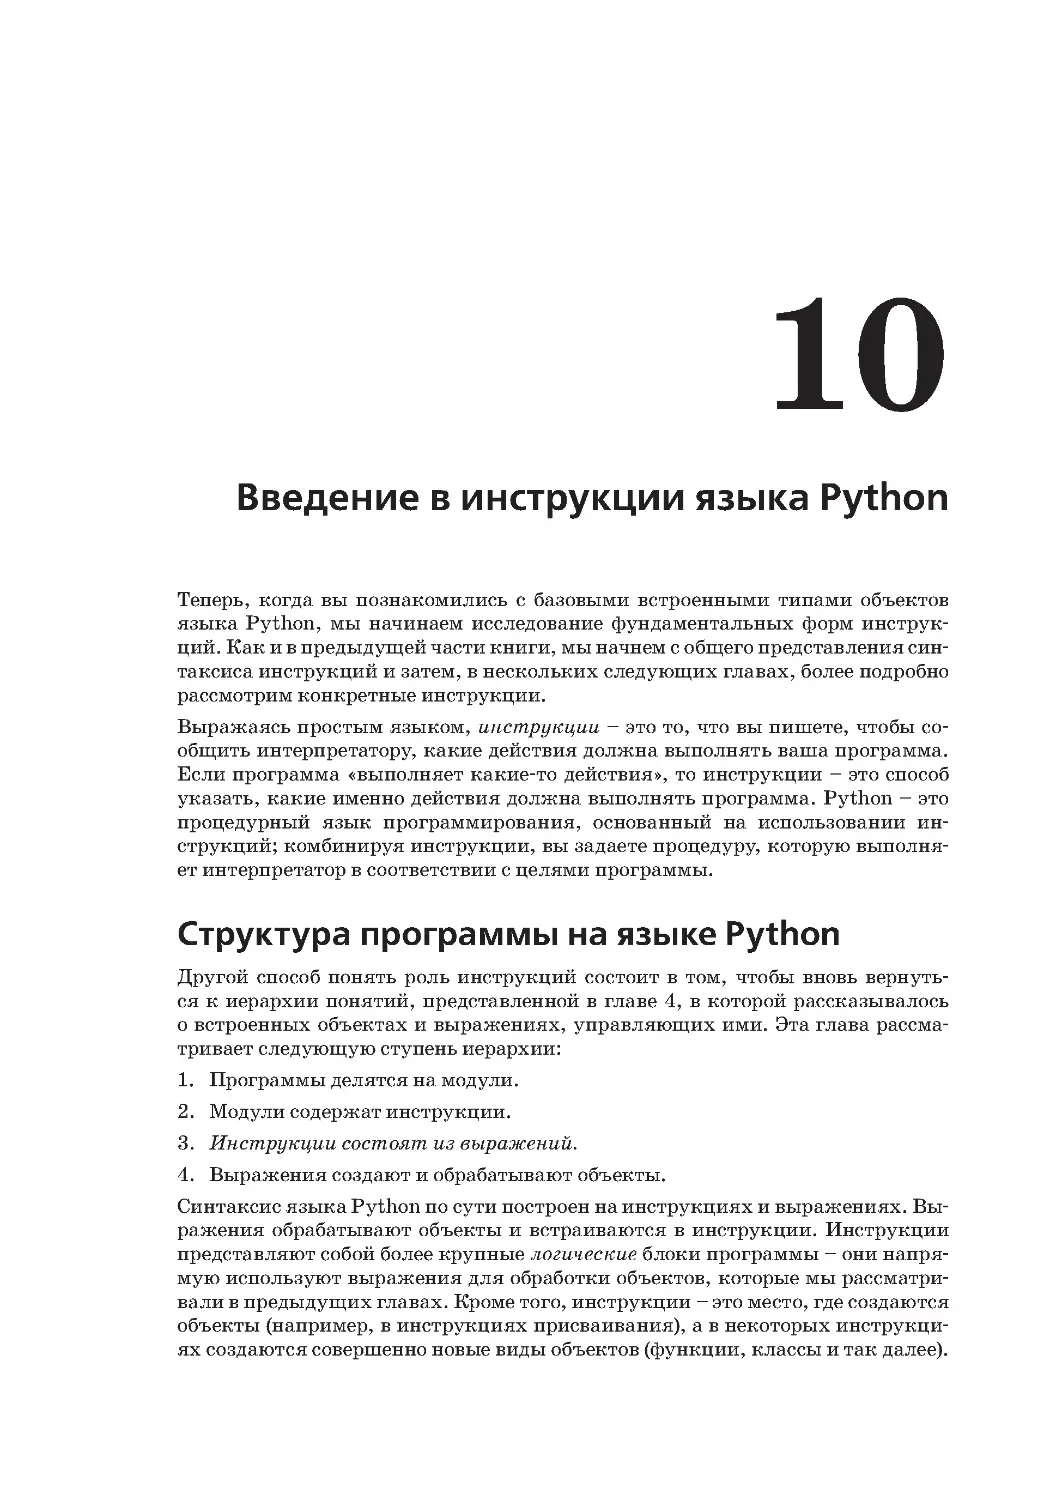 Глава 10.
Структура программы на языке Python